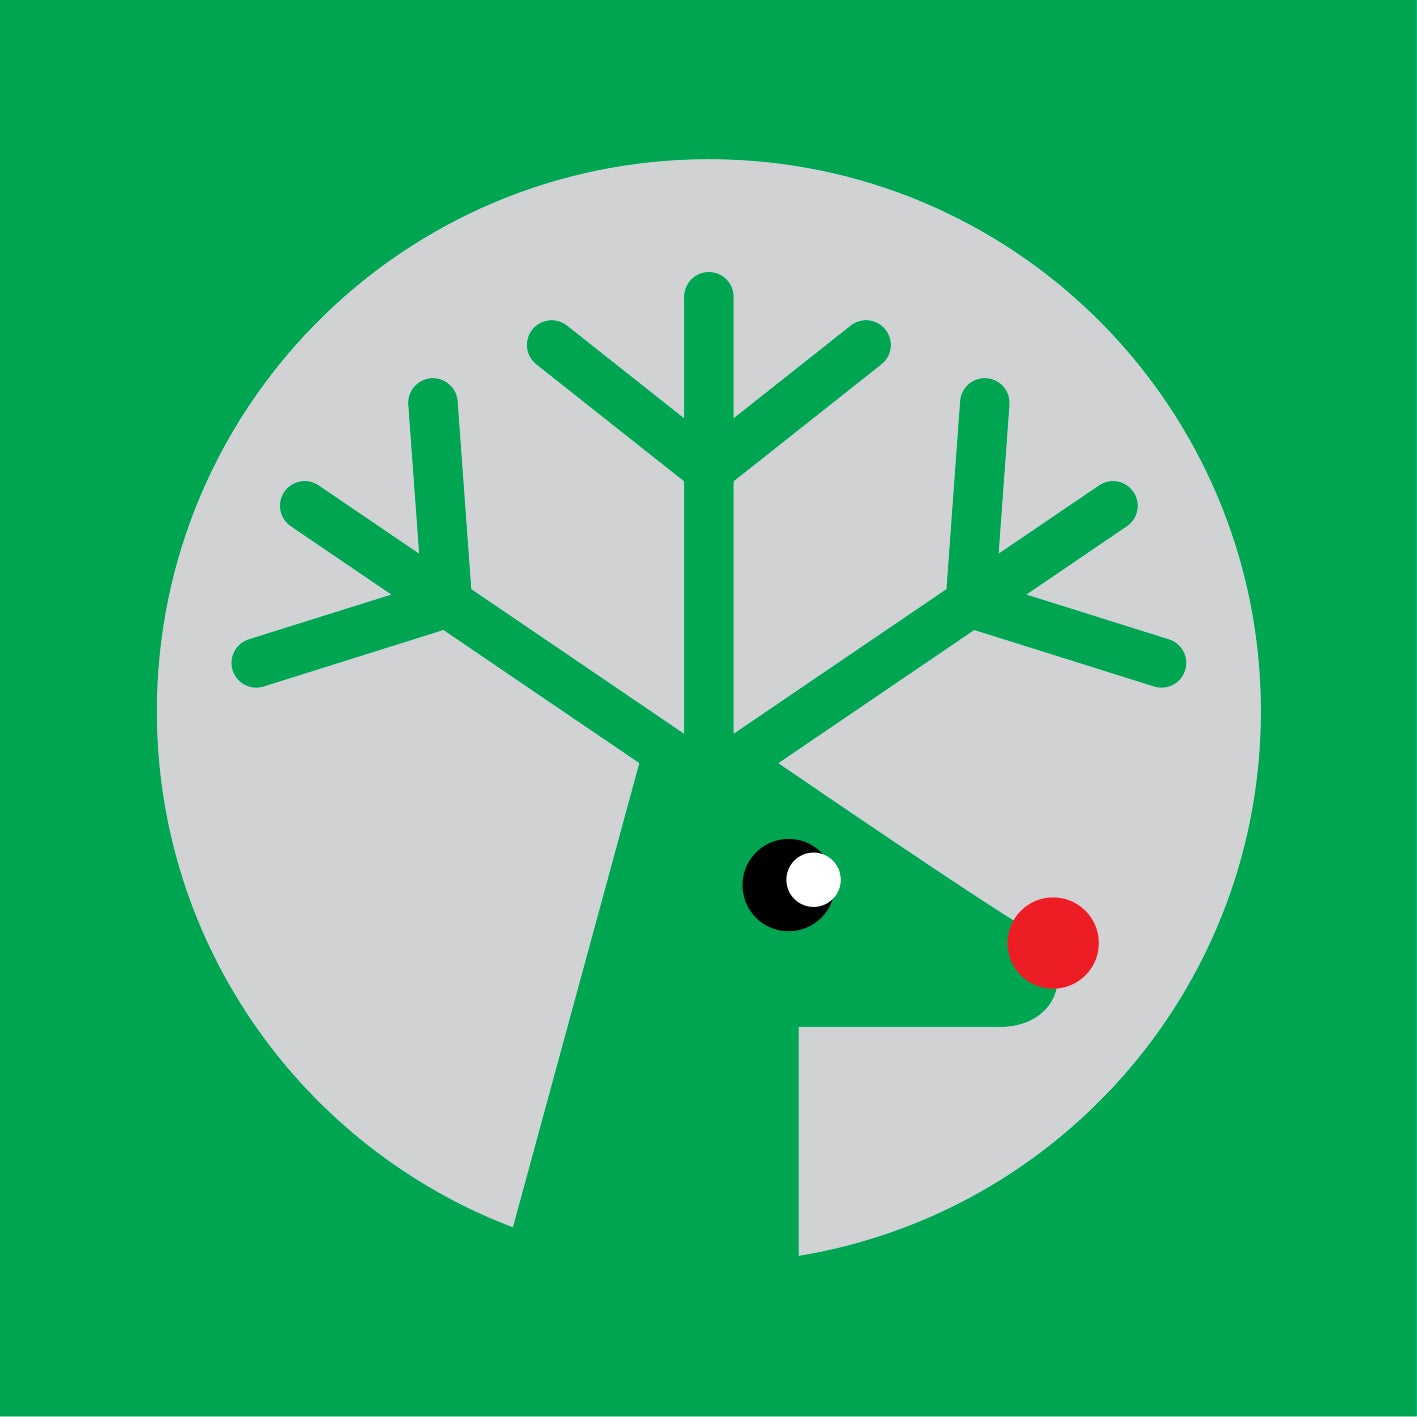 Silver reindeer on green Christmas card